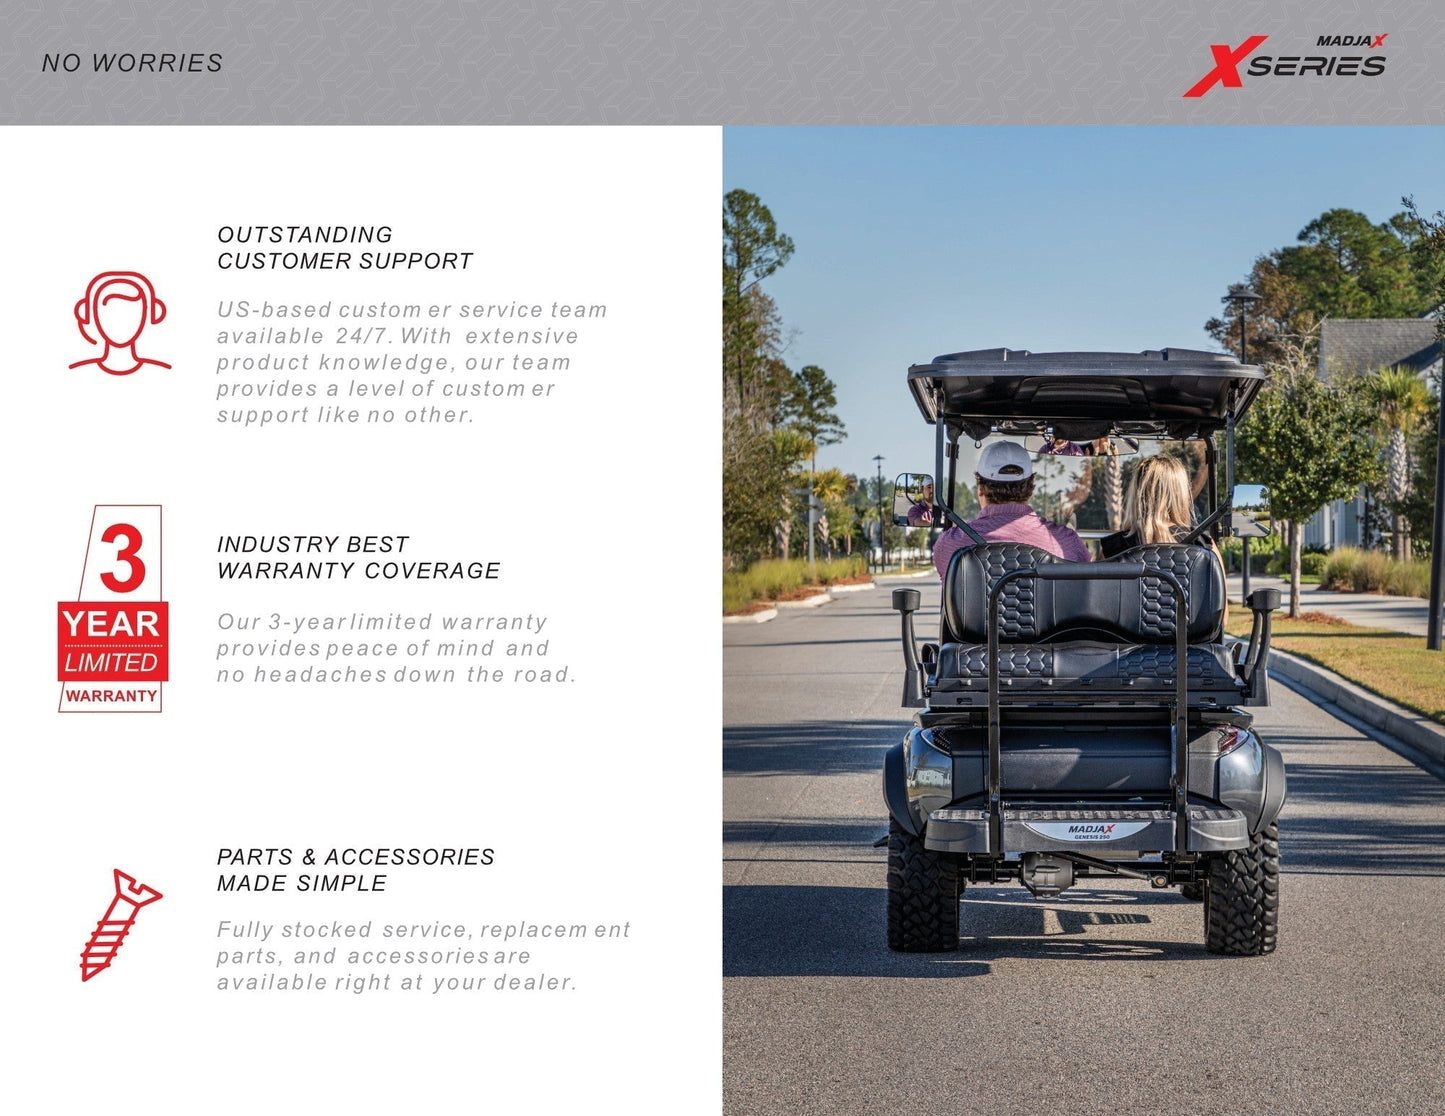 MADJAX X Series Storm 4 Passenger Lithium Golf Cart - Cherry Metallic #1099 *SOLD*